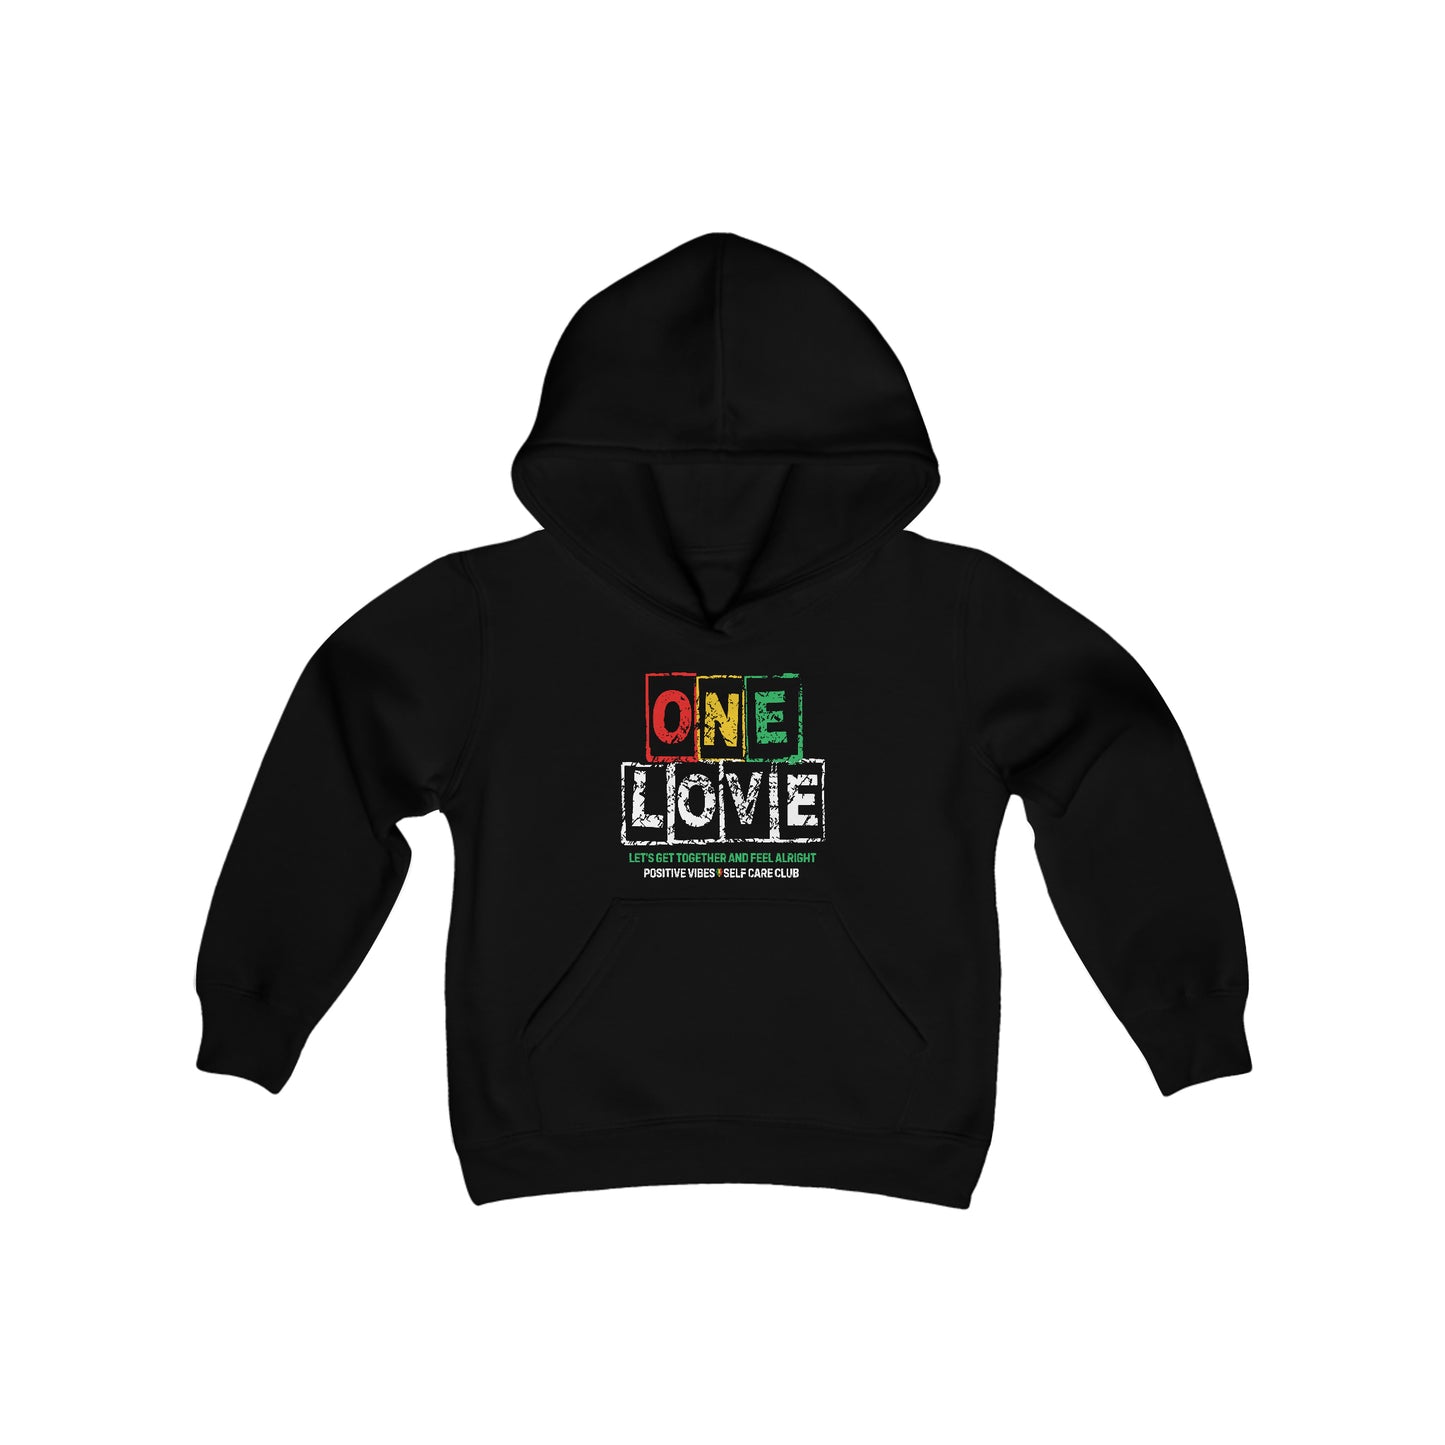 One Love (Juneteenth) Youth Hooded Sweatshirt